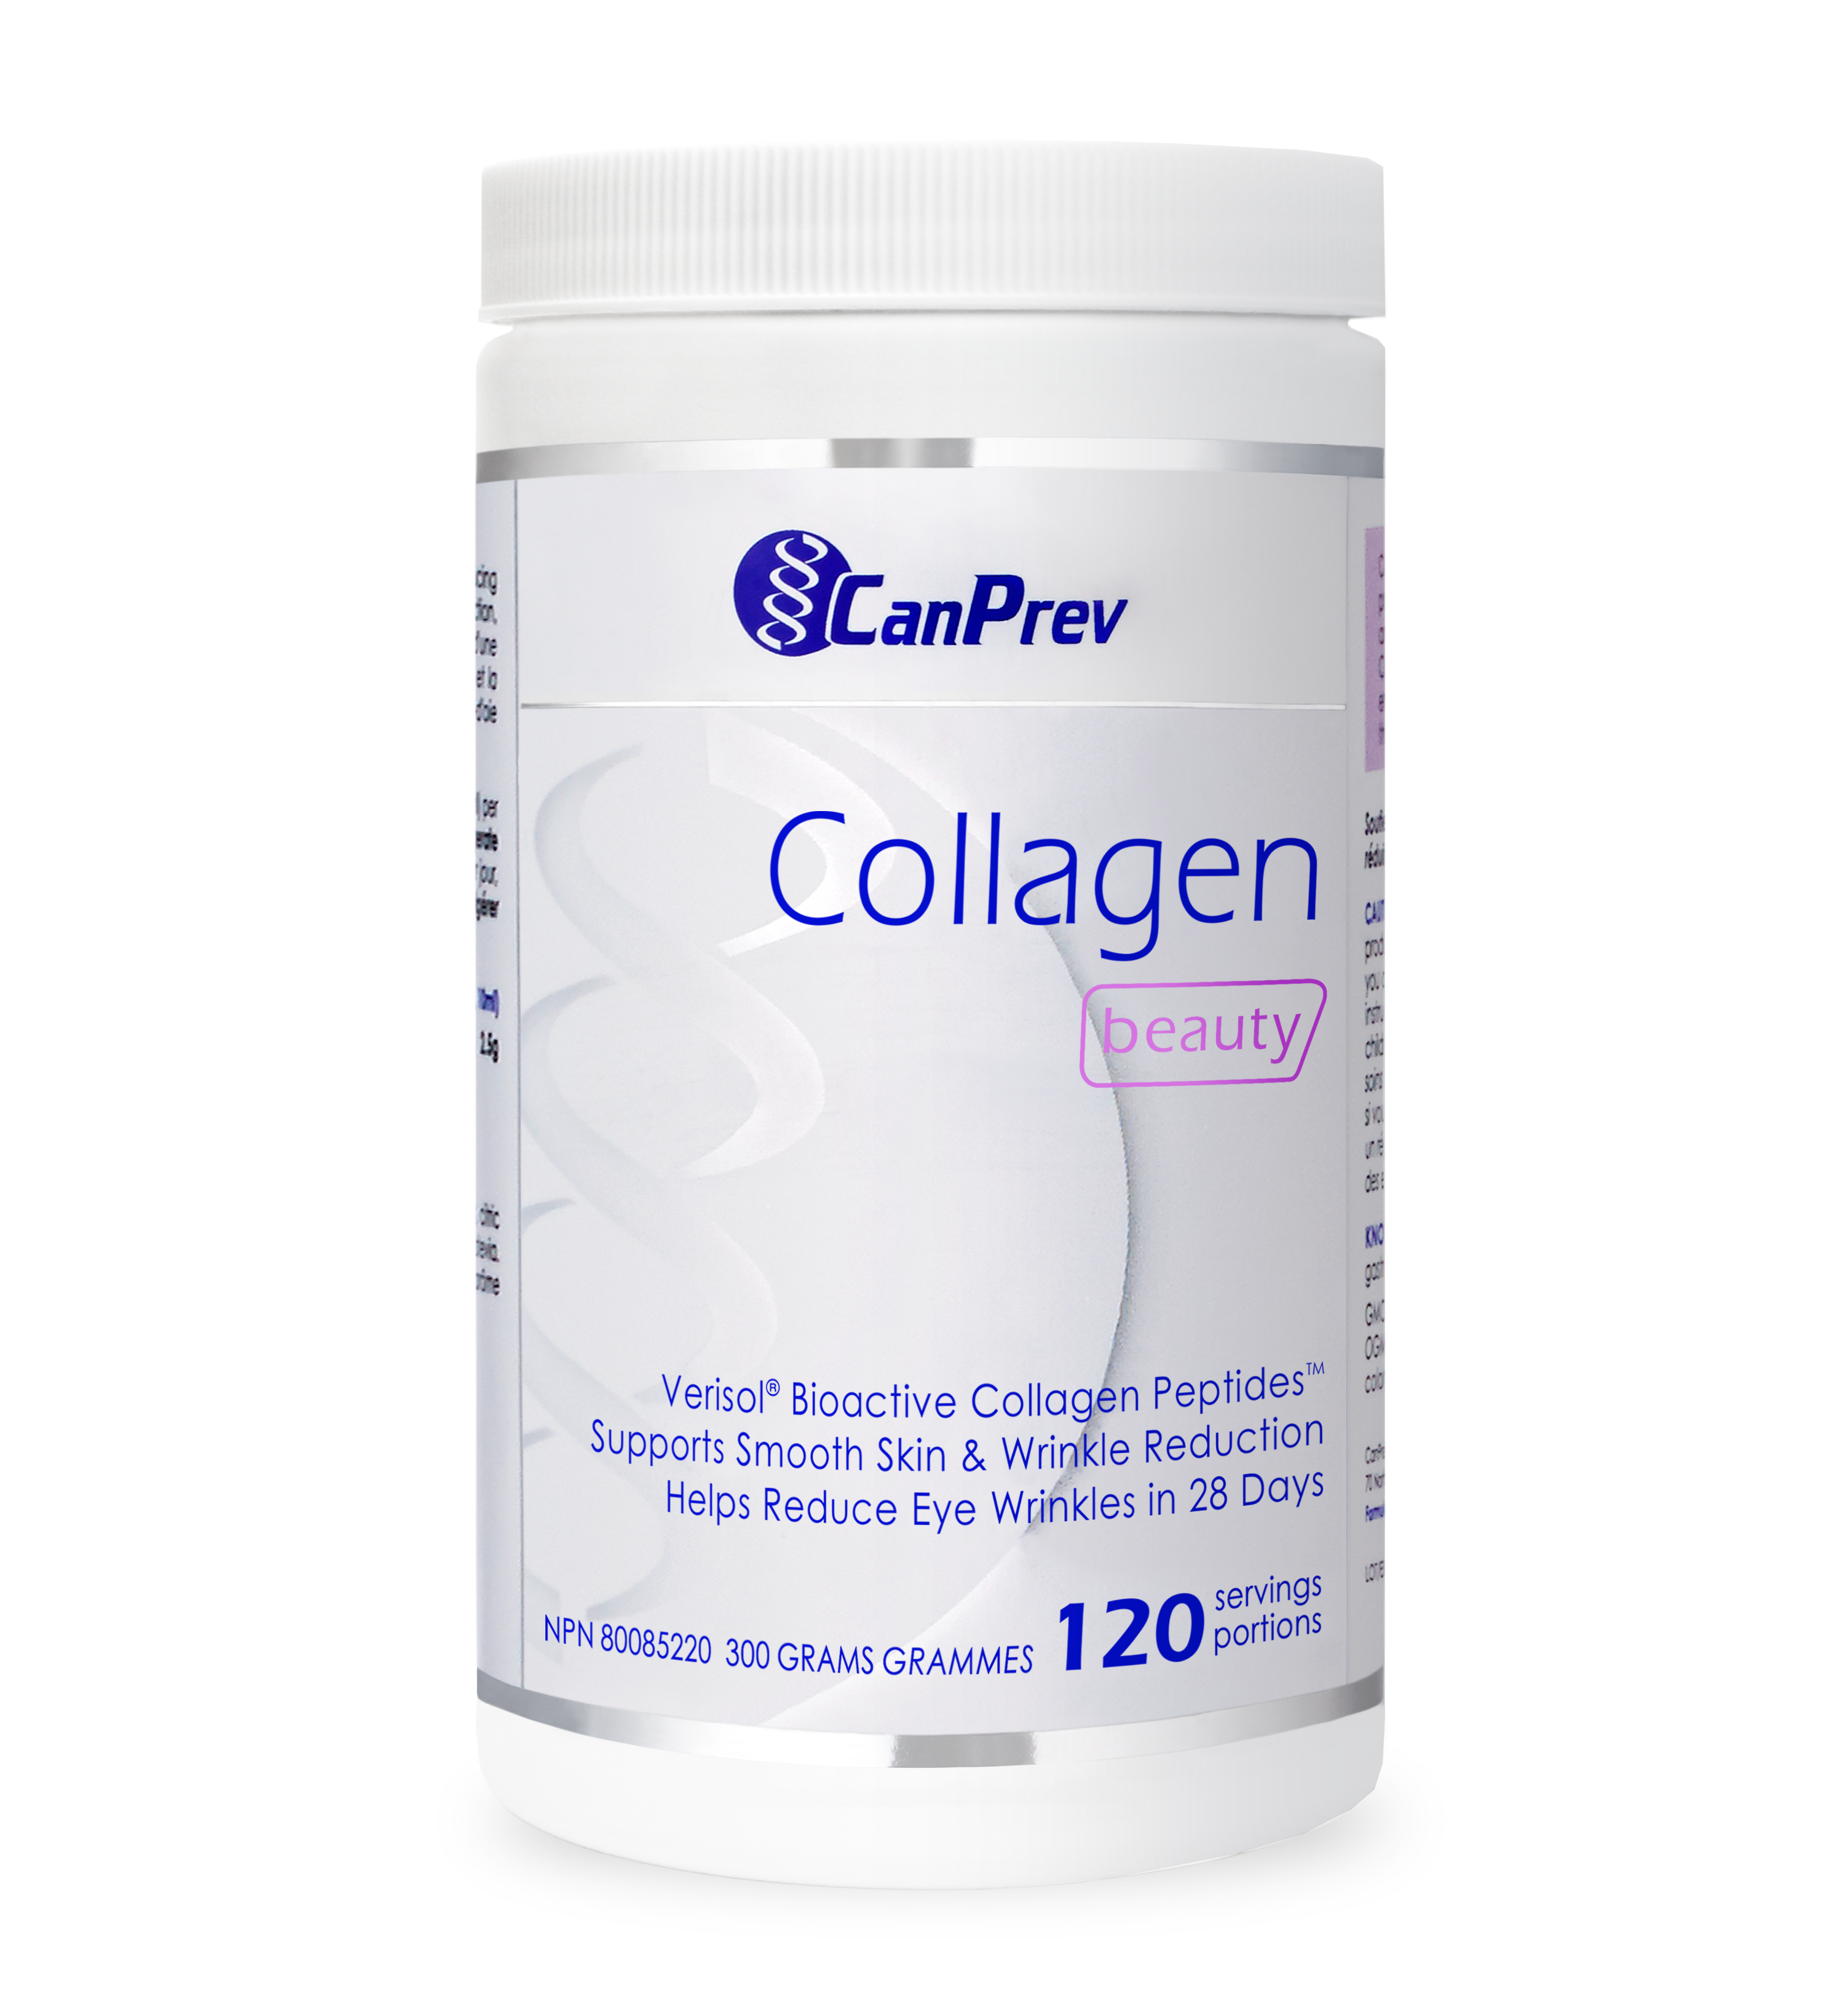 collagen beauty